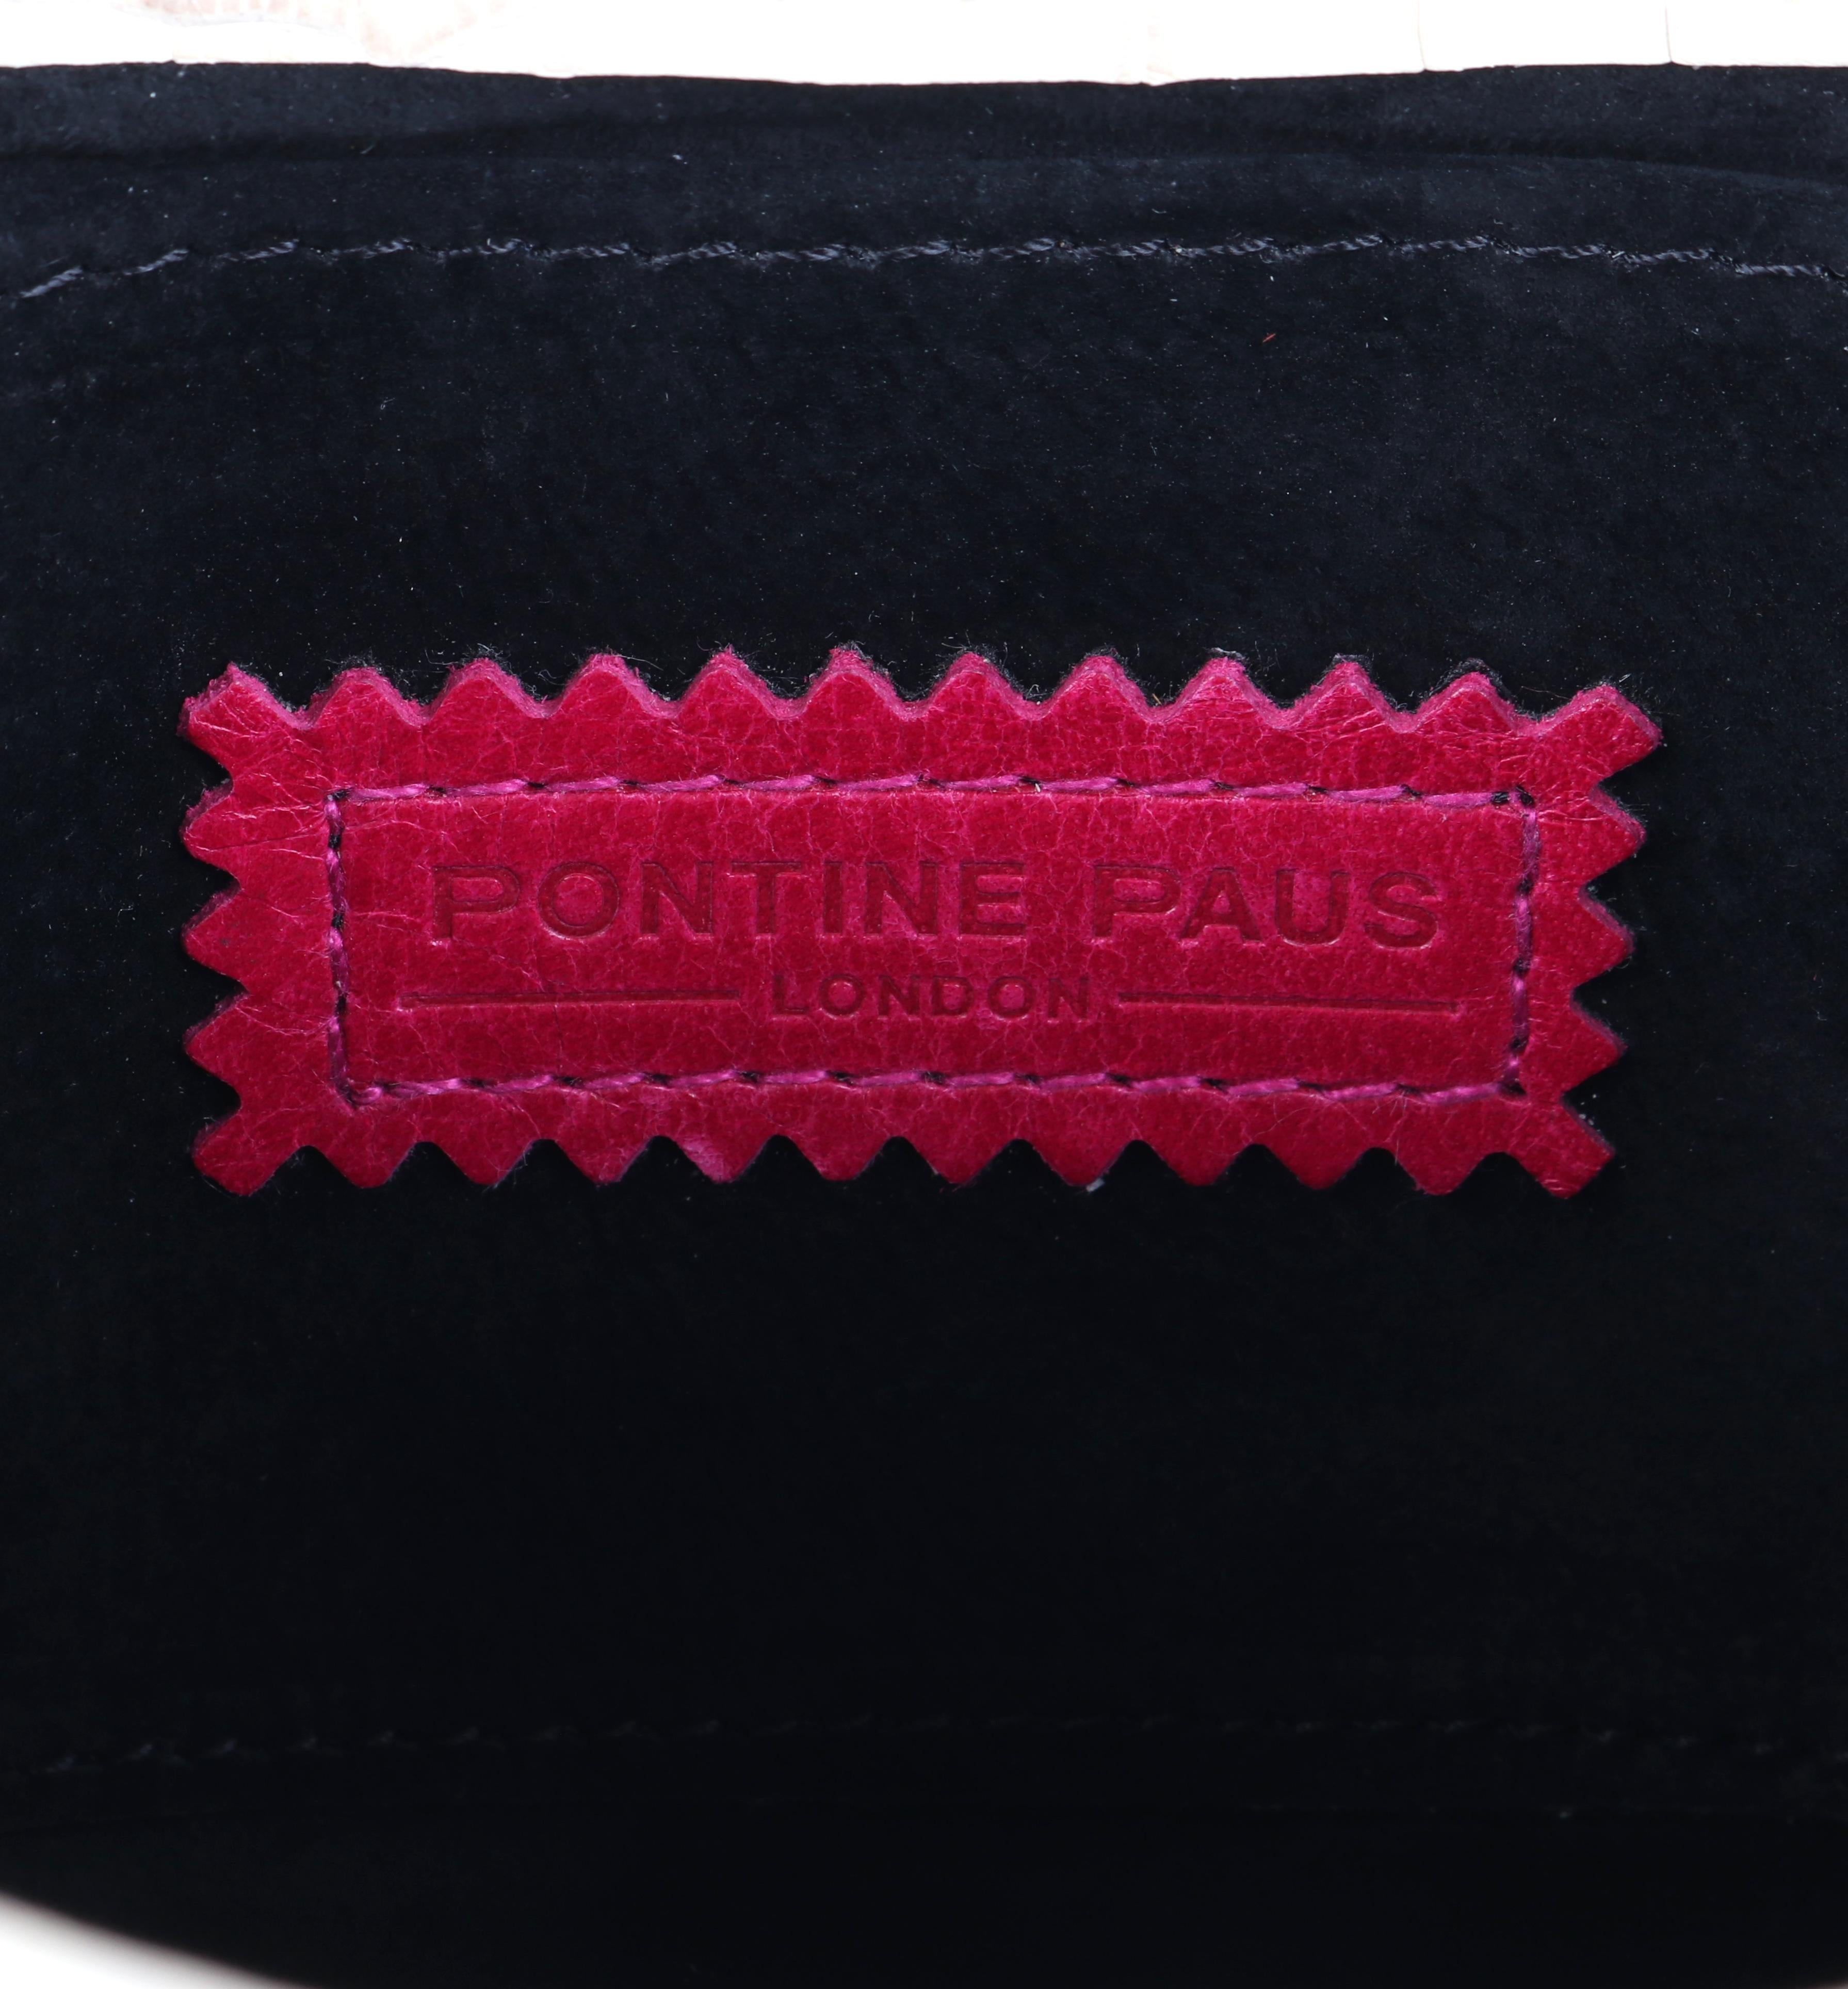 PONTINE PAUS c. 2008 Red Ivory Crocodile Leather Flap Fold Clutch Purse Bag RARE For Sale 10